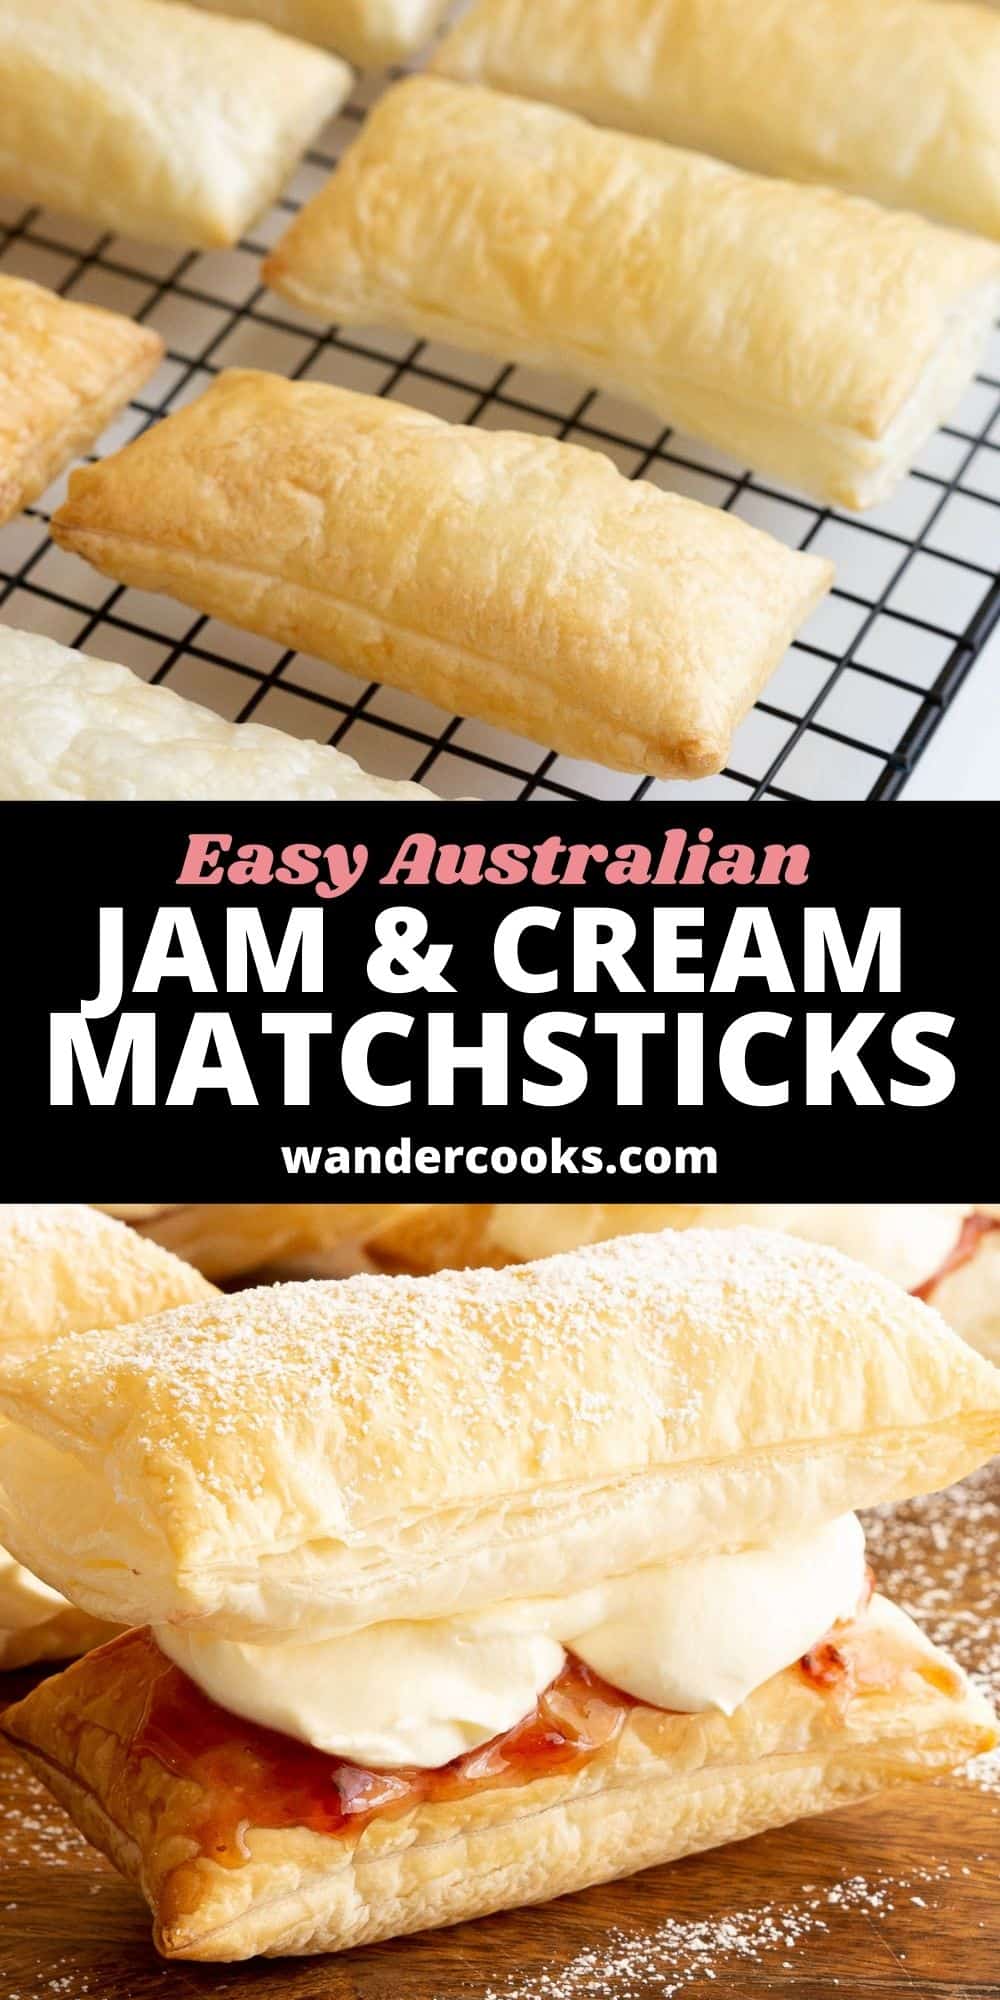 3 Ingredient Jam & Cream Matchsticks